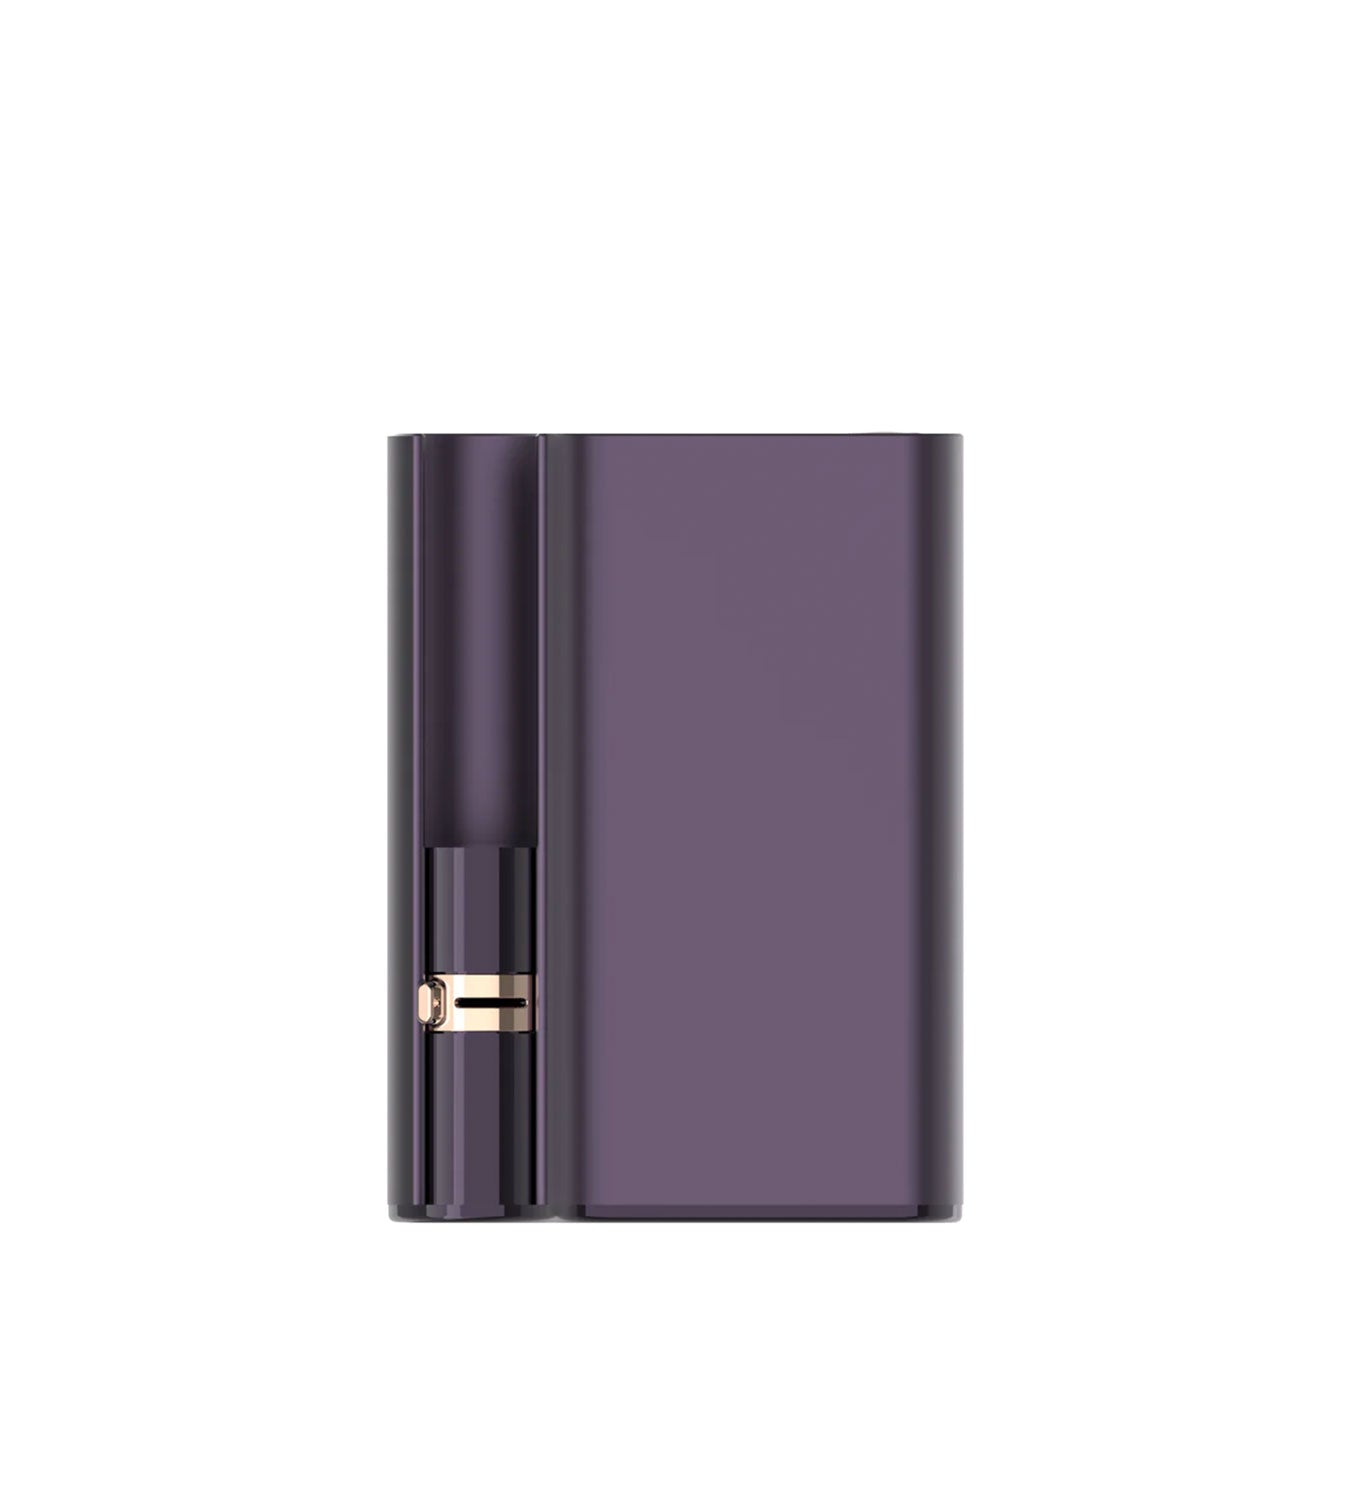 CCELL Palm Pro Battery deep purple